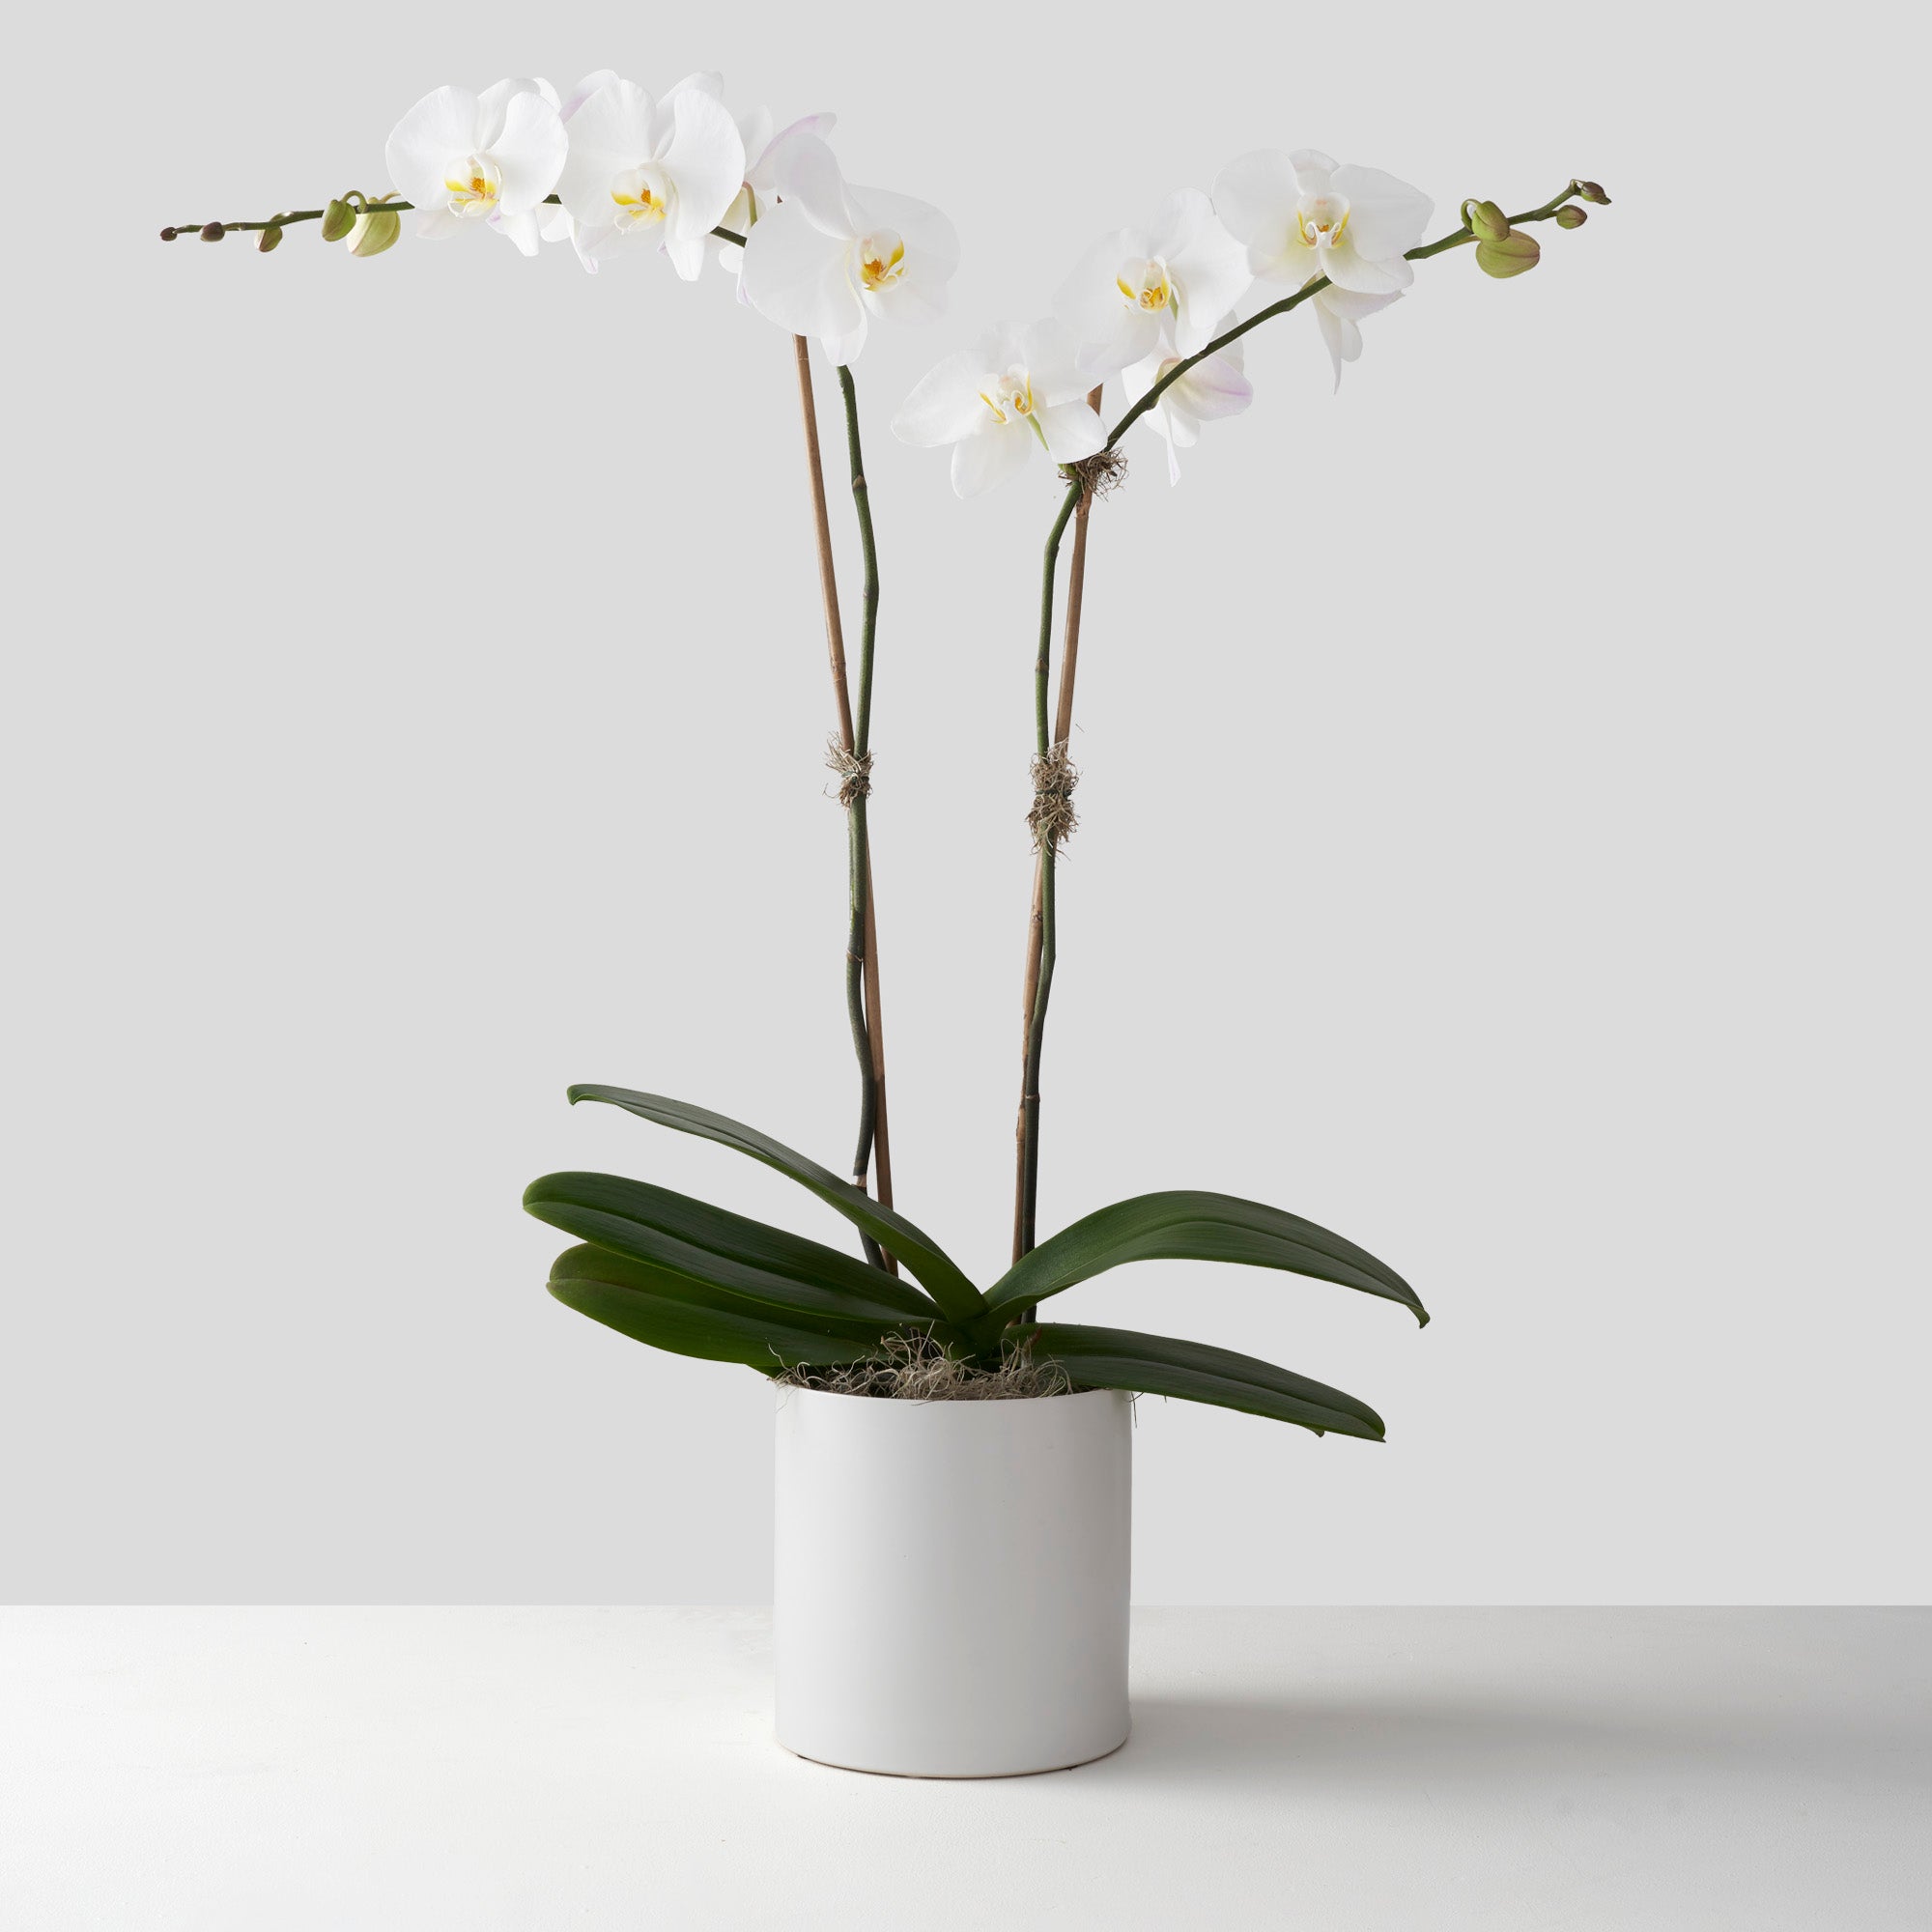 Double stemmed white phalaenopsis orchid plant in plain white ceramic pot on white background.